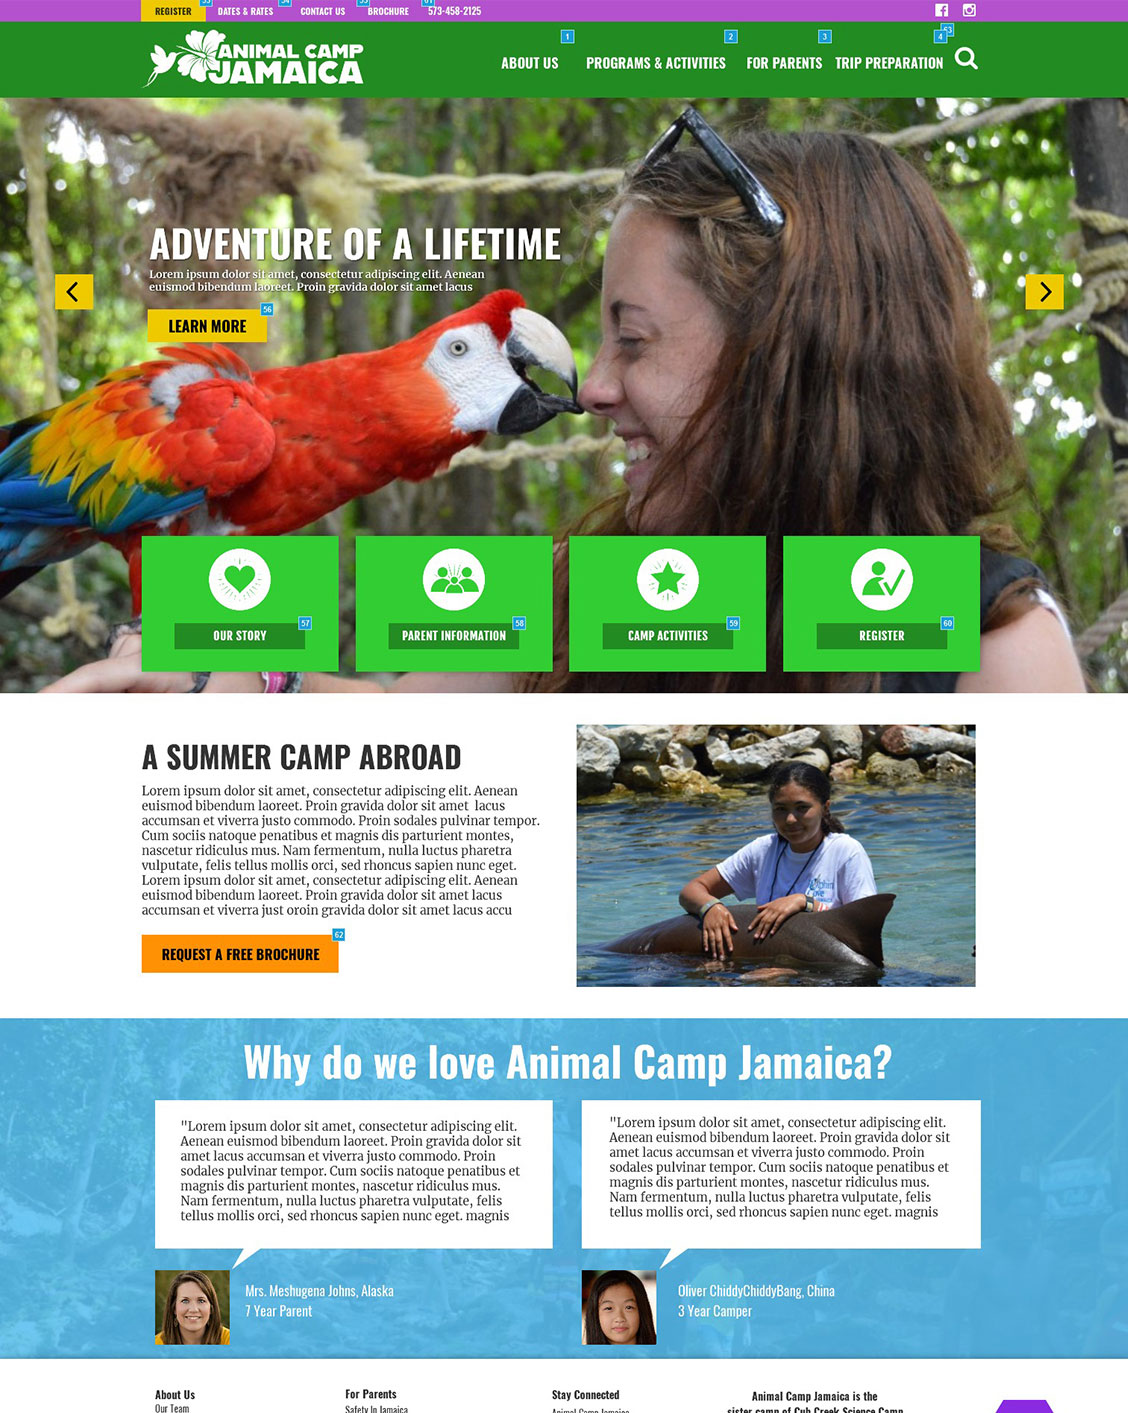 Animal Camp Jamaica - High Fidelity Mockup Portfolio Image - Designs by Martin Holloway